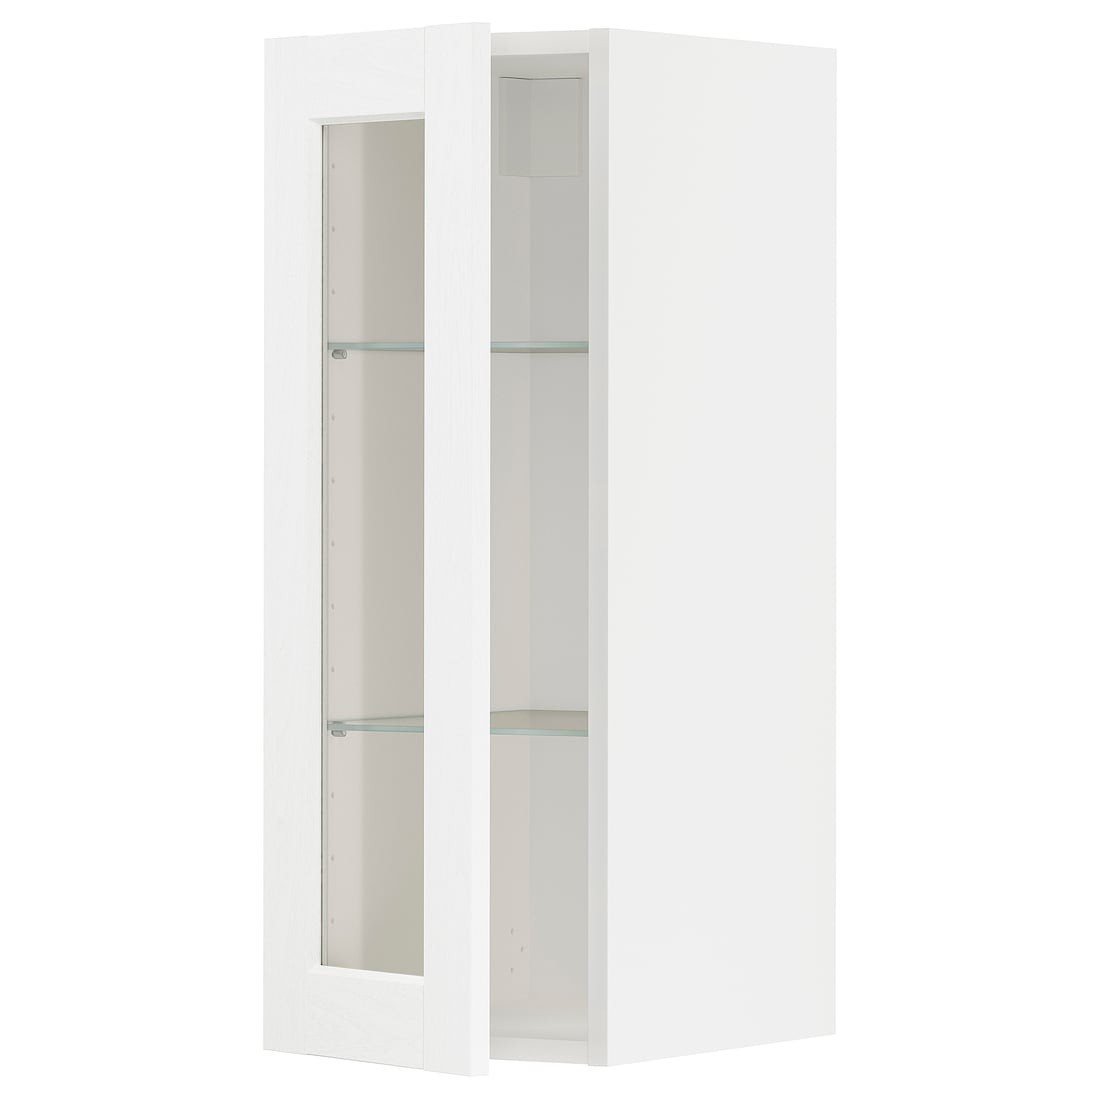 METOD МЕТОД Навесной шкаф, белый Enköping / белый имитация дерева, 30x80 см